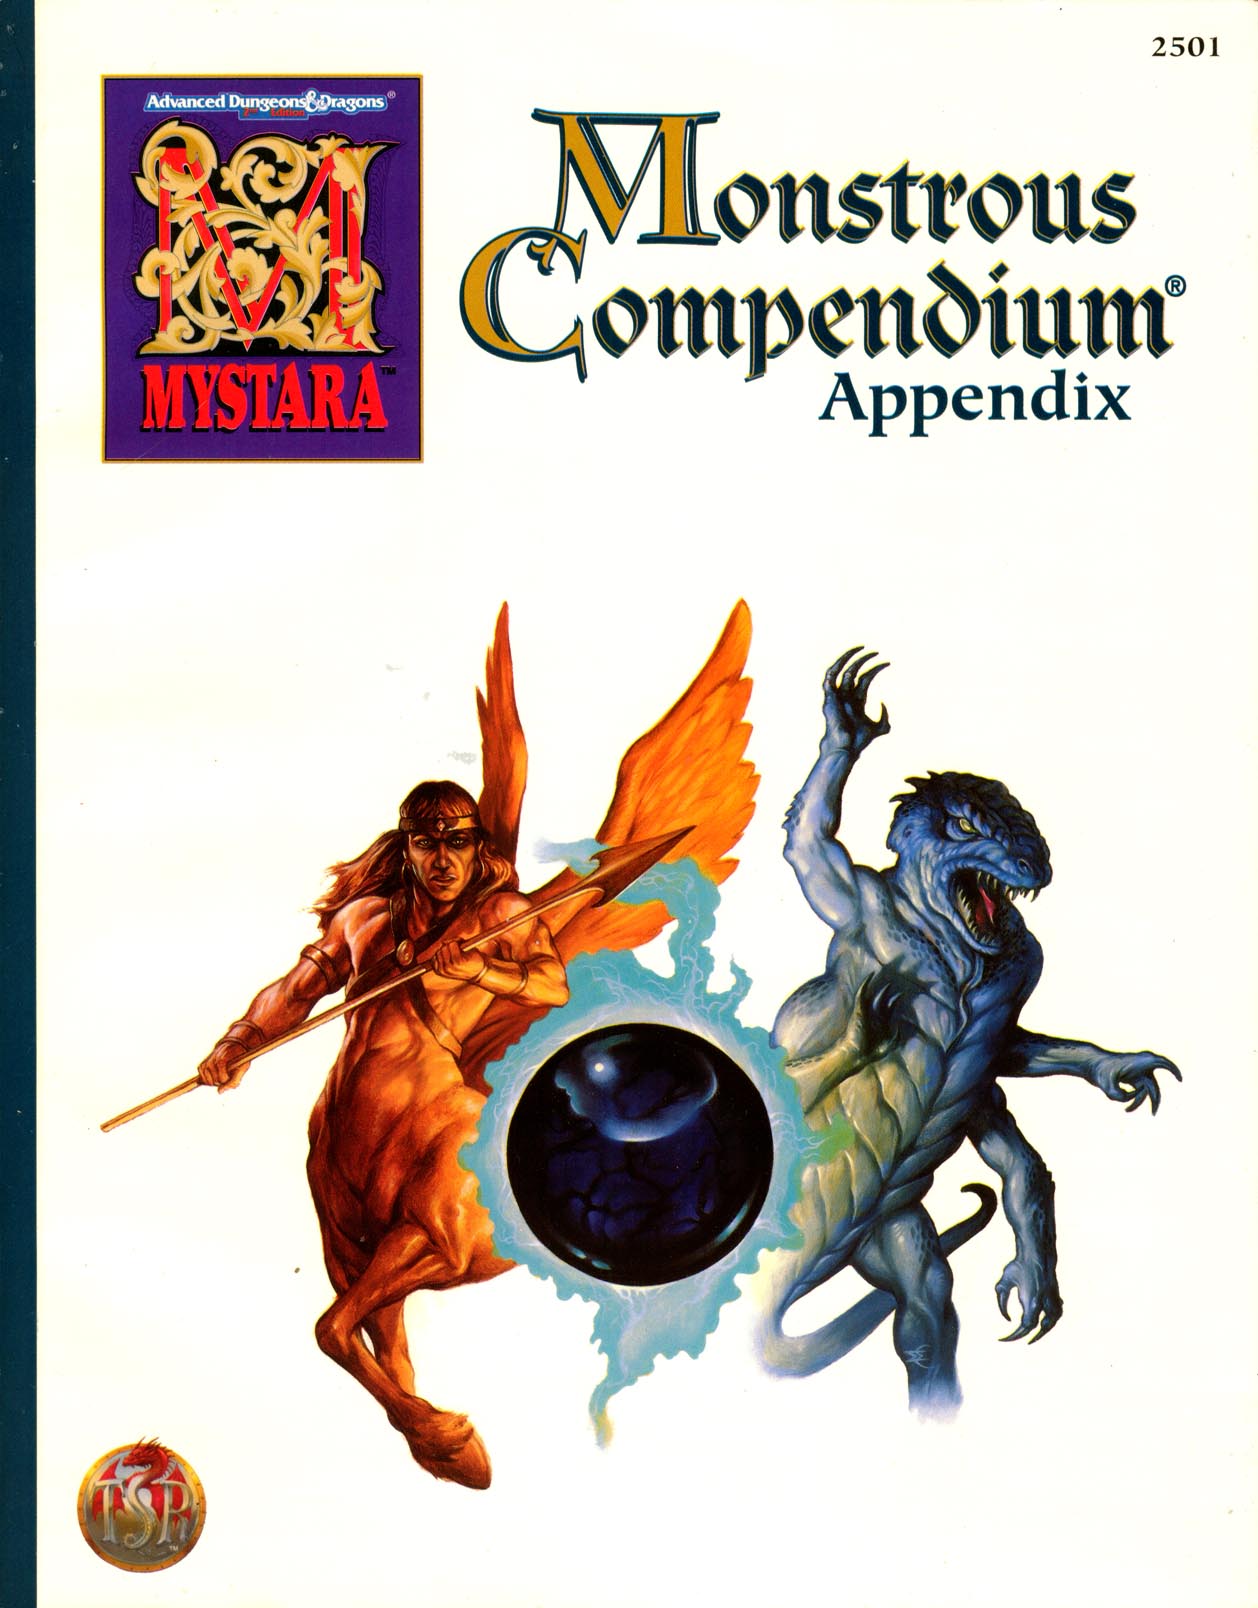 Mystara AppendixCover art